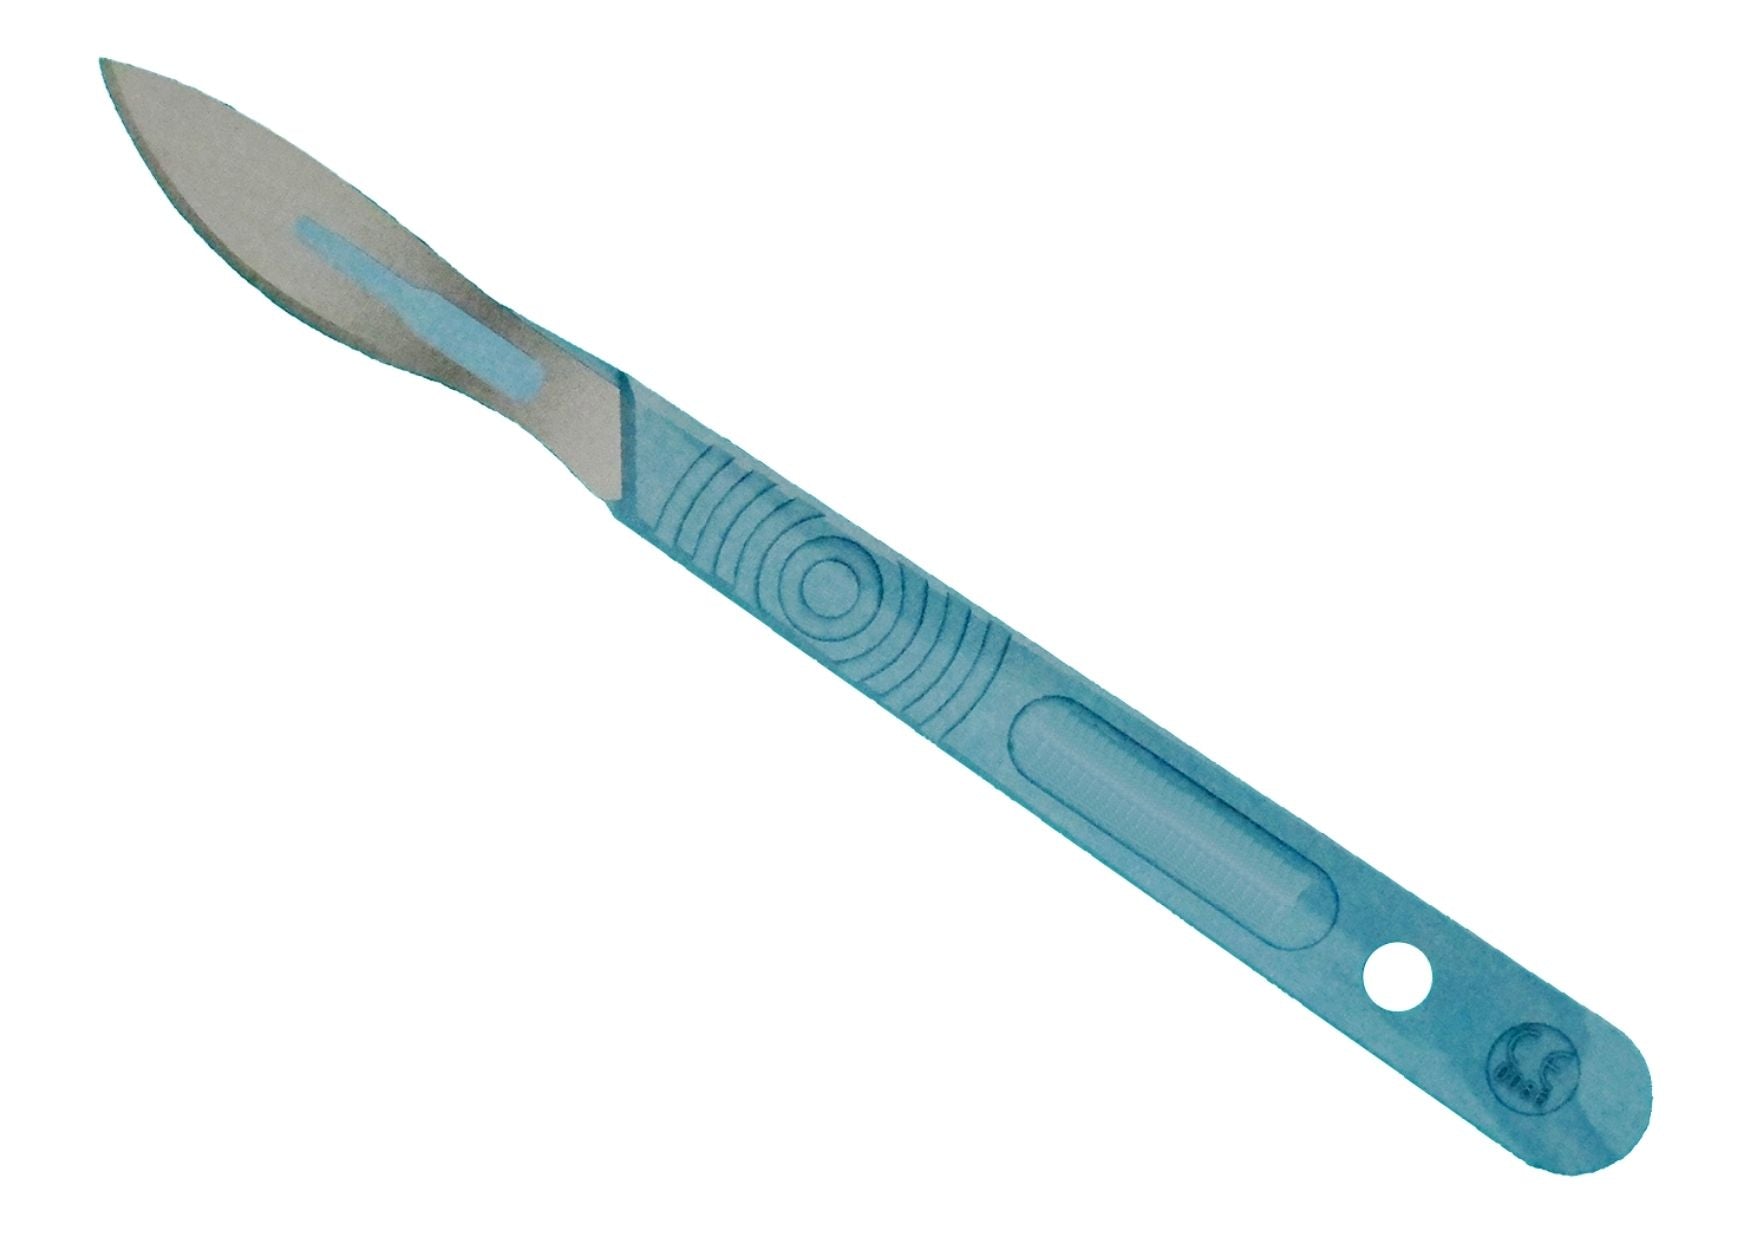 Swann Morton disposable scalpels